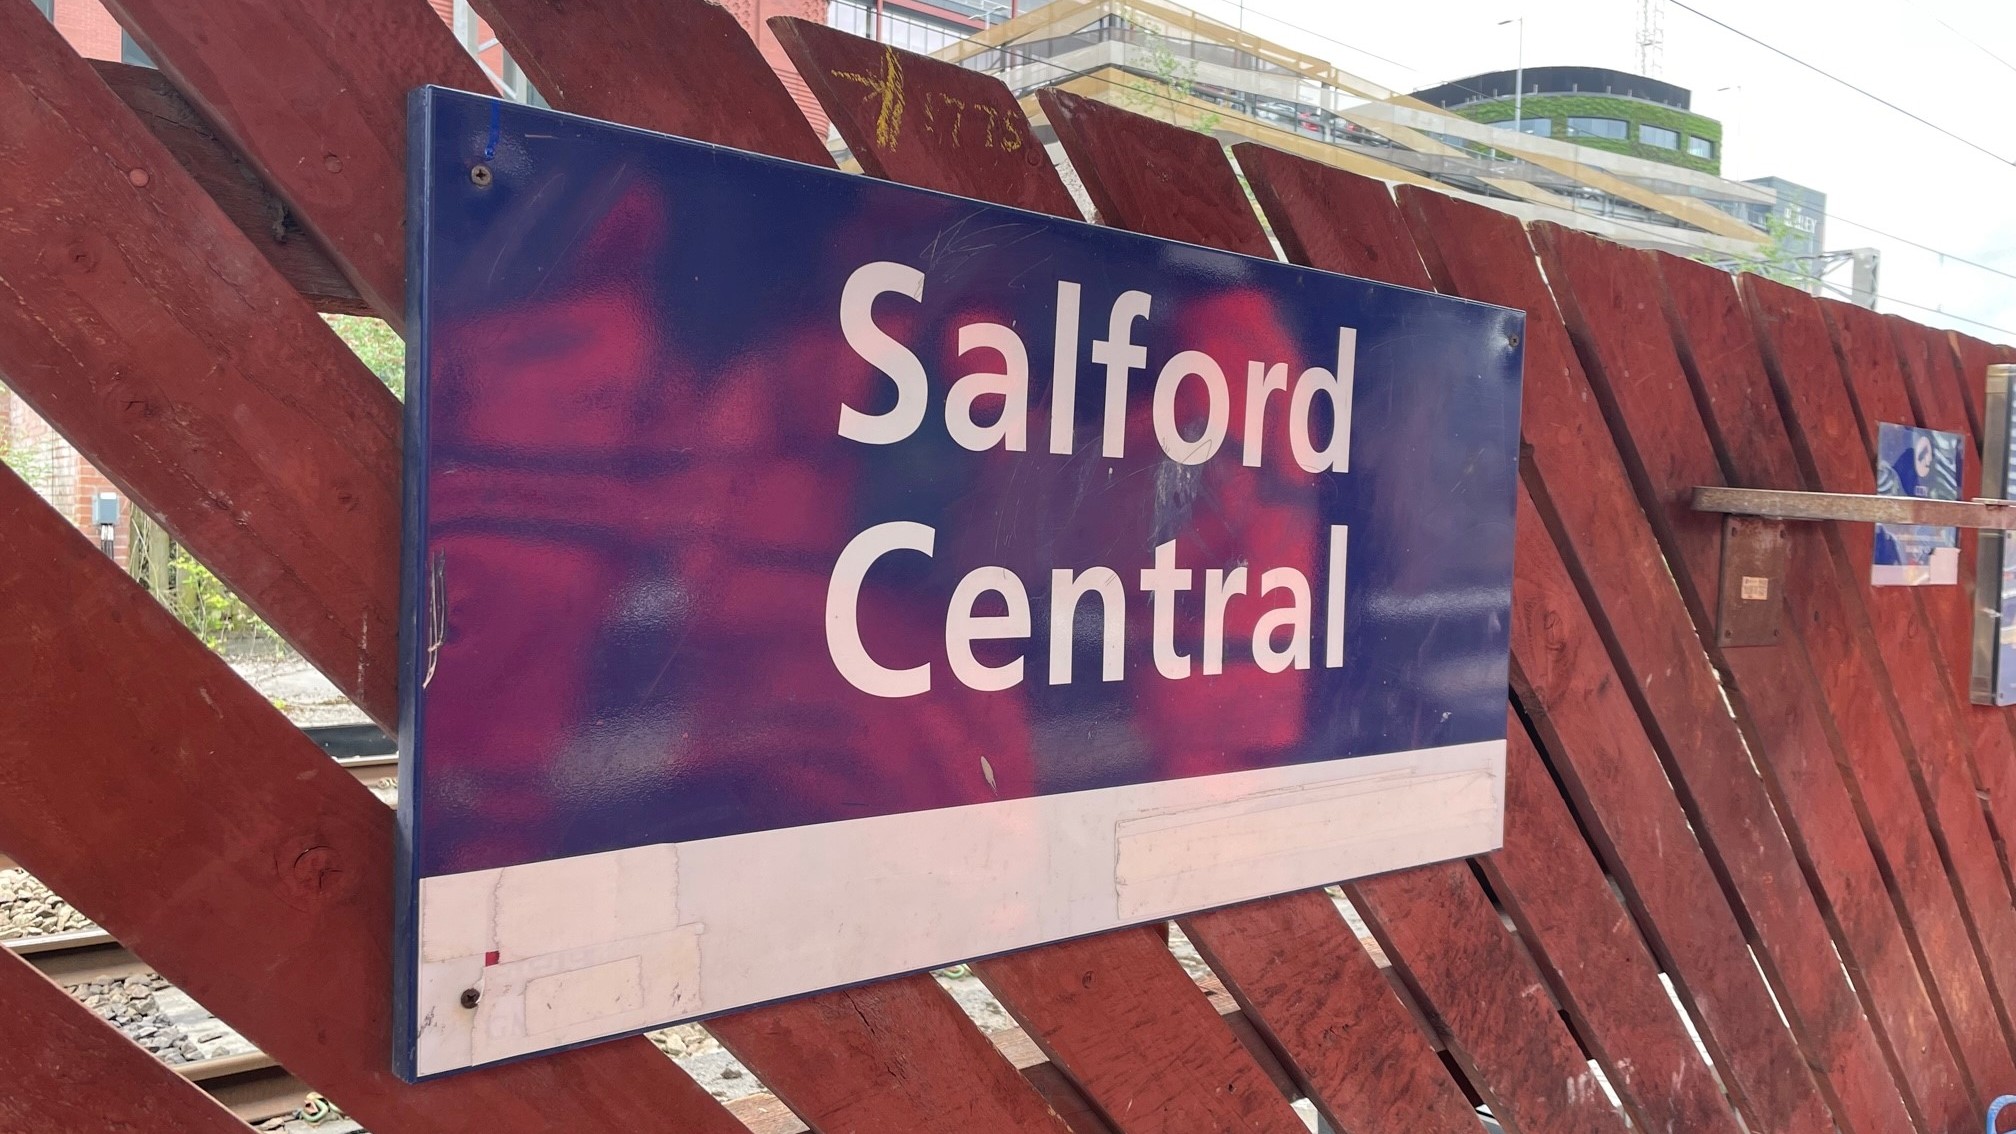 Image shows Salford Central station signage